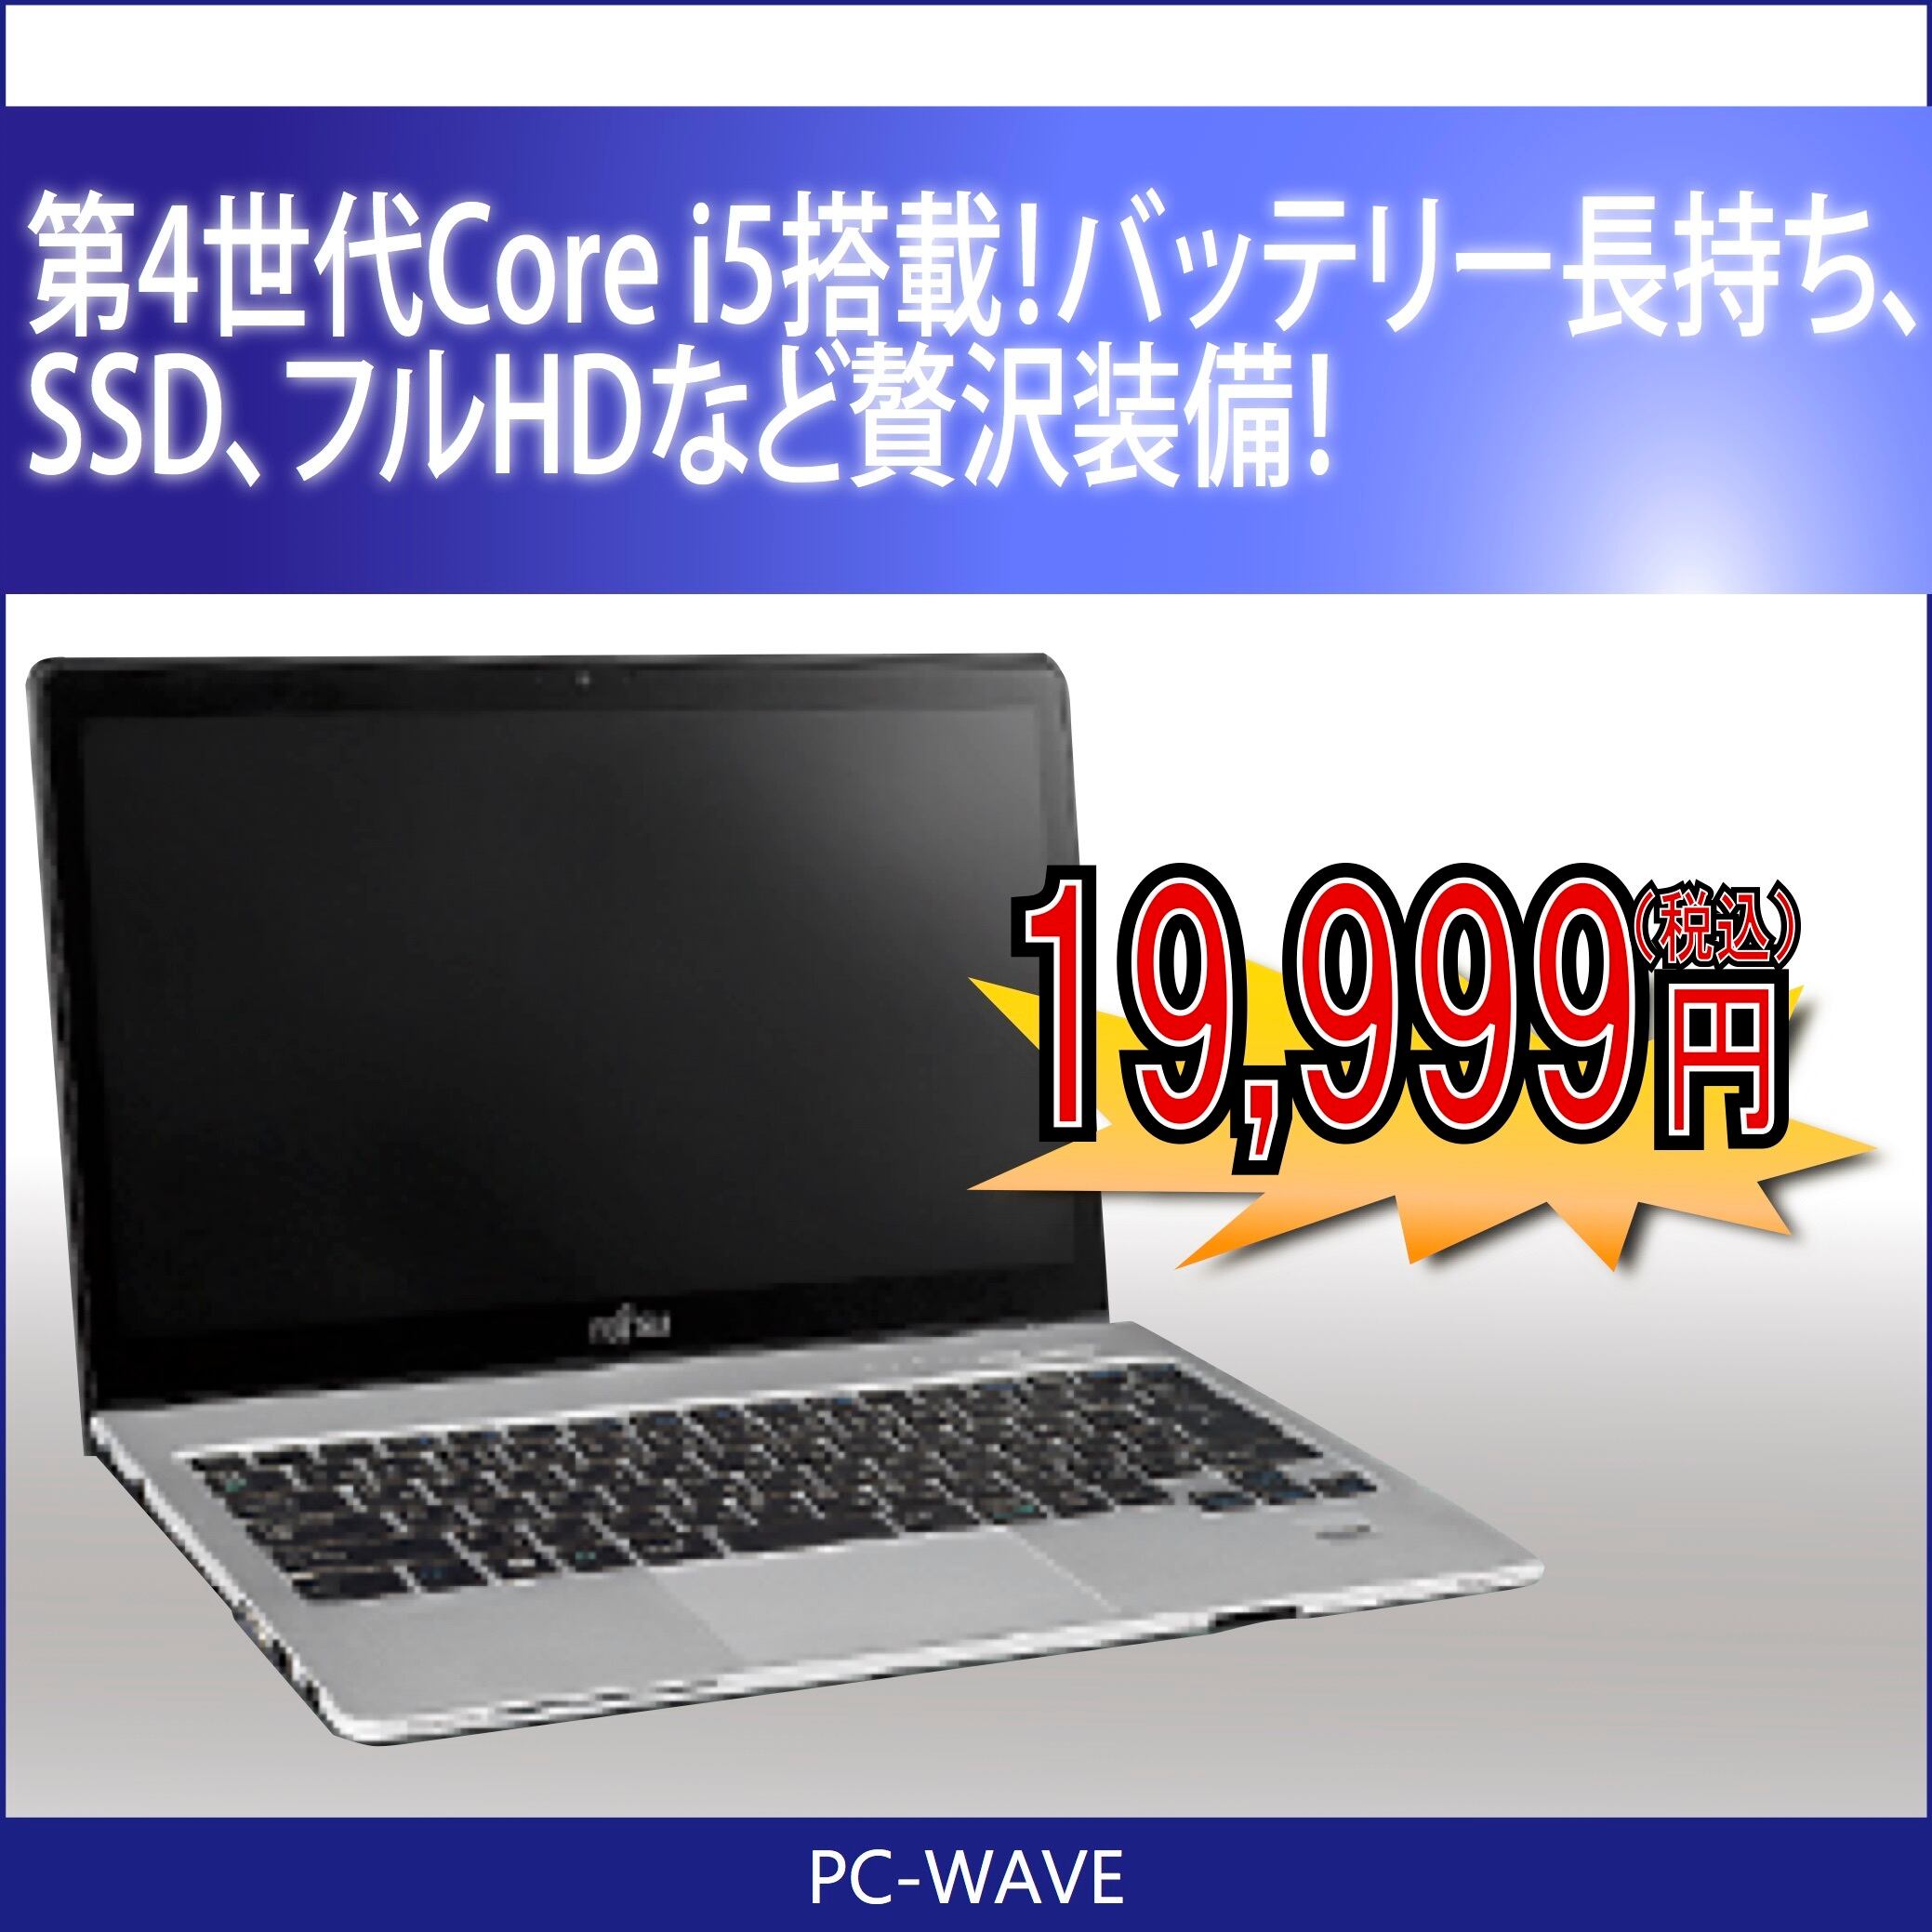 LIFEBOOK S904/J ノートパソコン | PC-WAVE